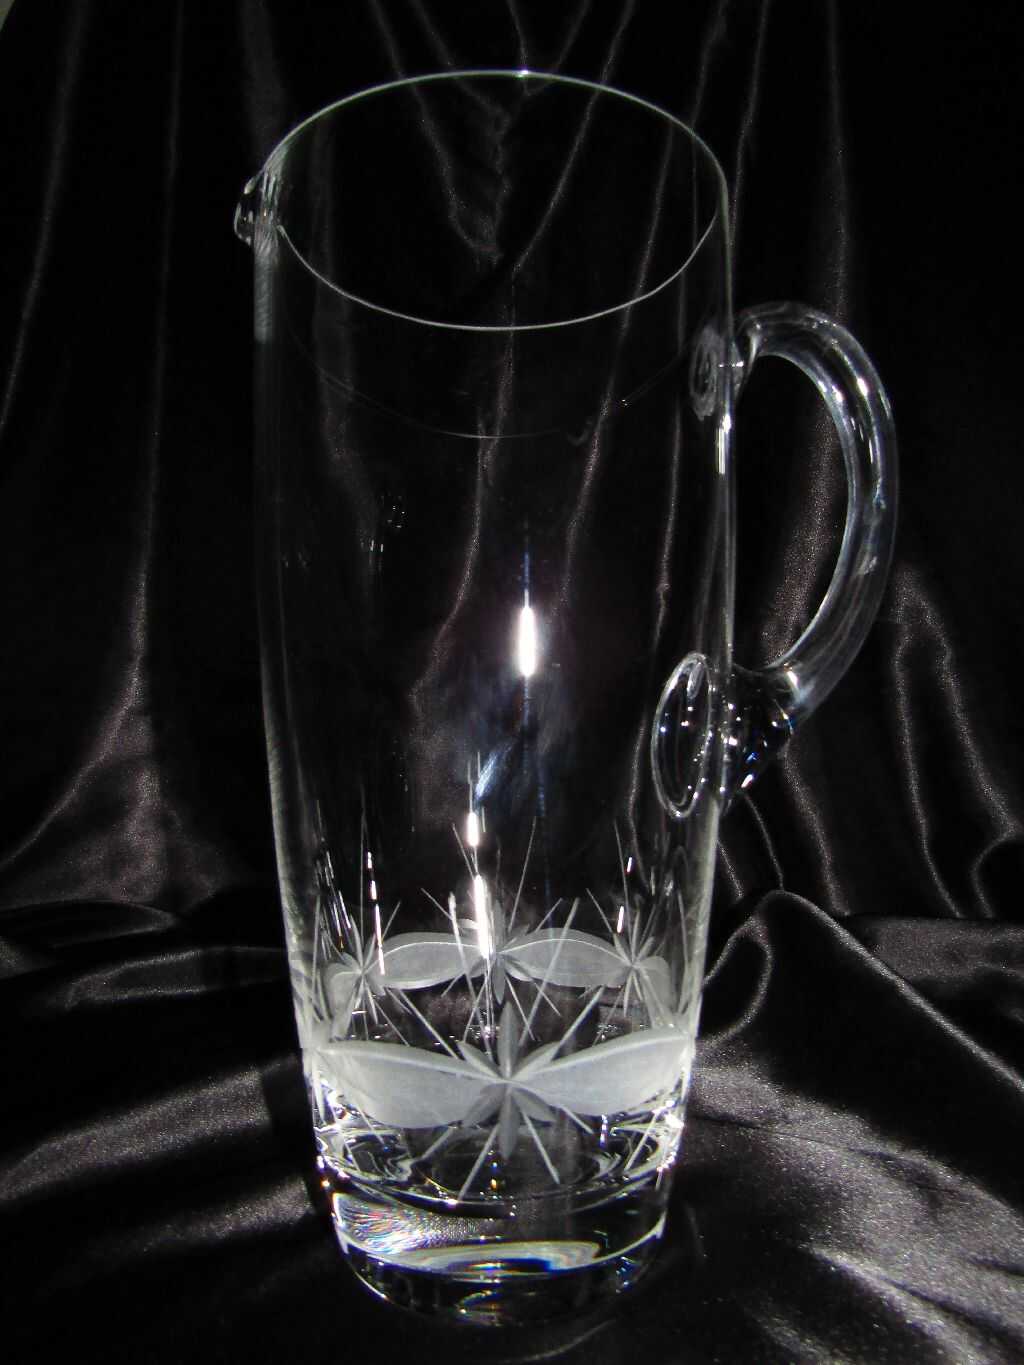 Lsg-Kristall Glas Krug Hand geschliffen Kristallglas Kante KR-088 1500 ml 1 Stück.